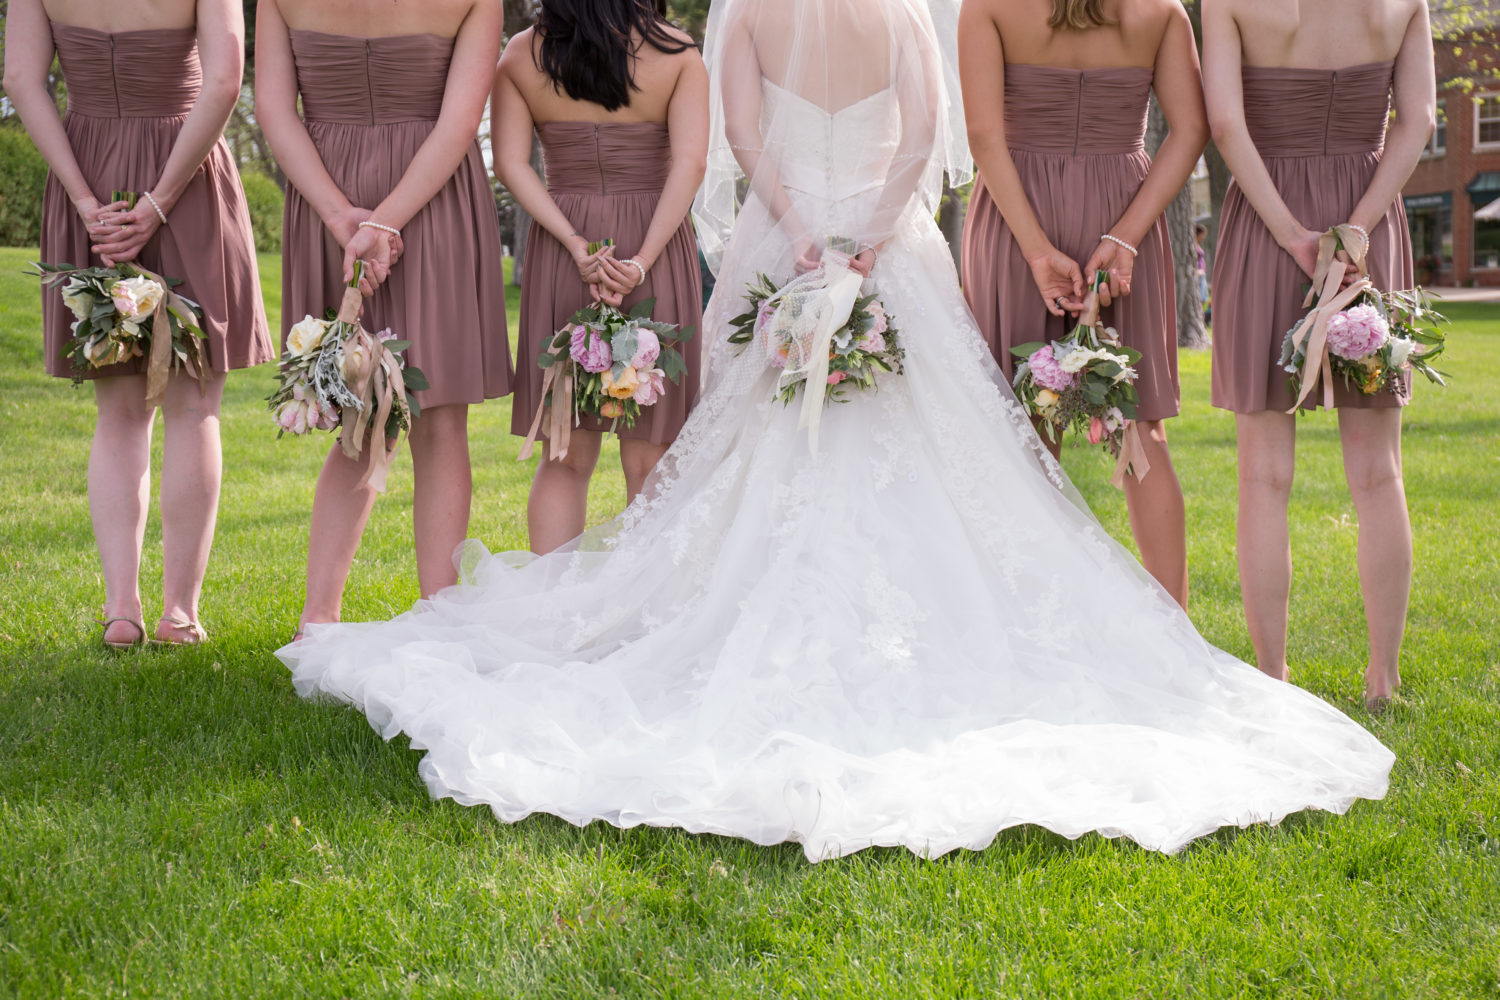 why bridesmaids wear matching dresses wedding